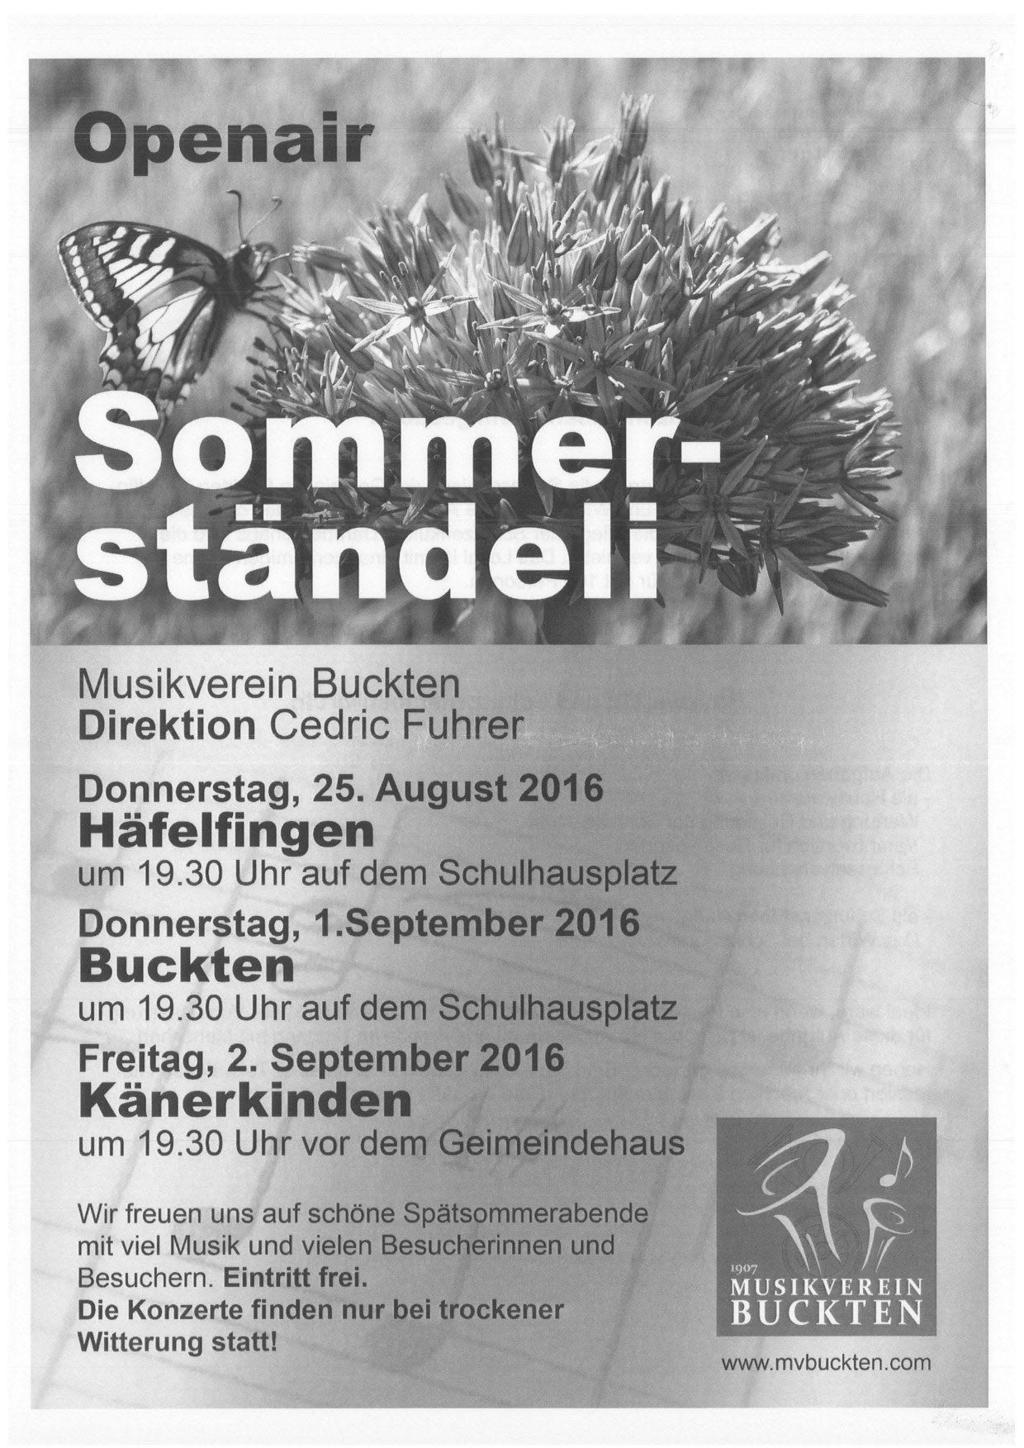 pena1r Musikverein Buckten Direktion Cedric Fuhrer Donnerstag, 25. August 2111 Häfelfingen um 19.30 Uhr auf dem Schul -.,...-... "' -i,~.,;)&ò: Donnerstag, 1.Septembert._~.:,s'S't'..,: Buckten um 19.